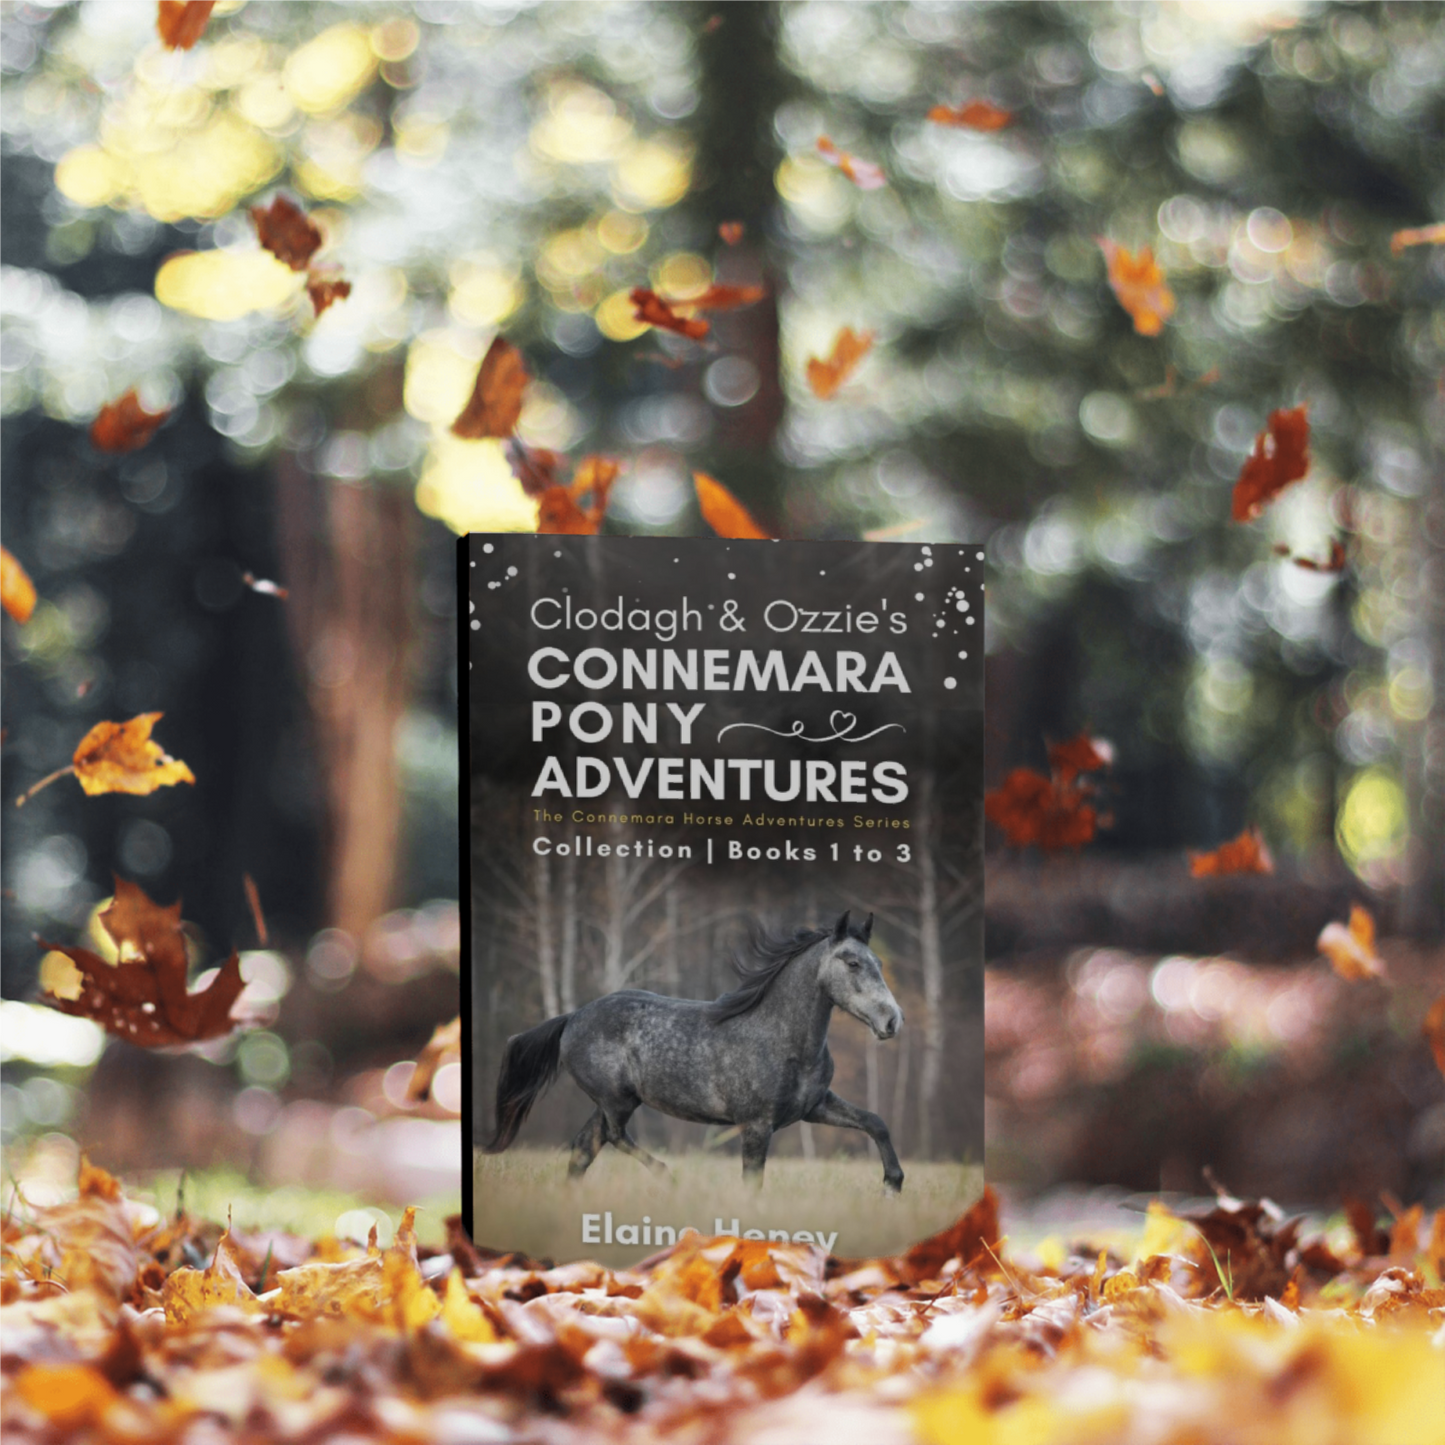 Clodagh & Ozzie's Connemara Pony Adventures | The Connemara Horse Adventures Series Collection - Books 1 to 3